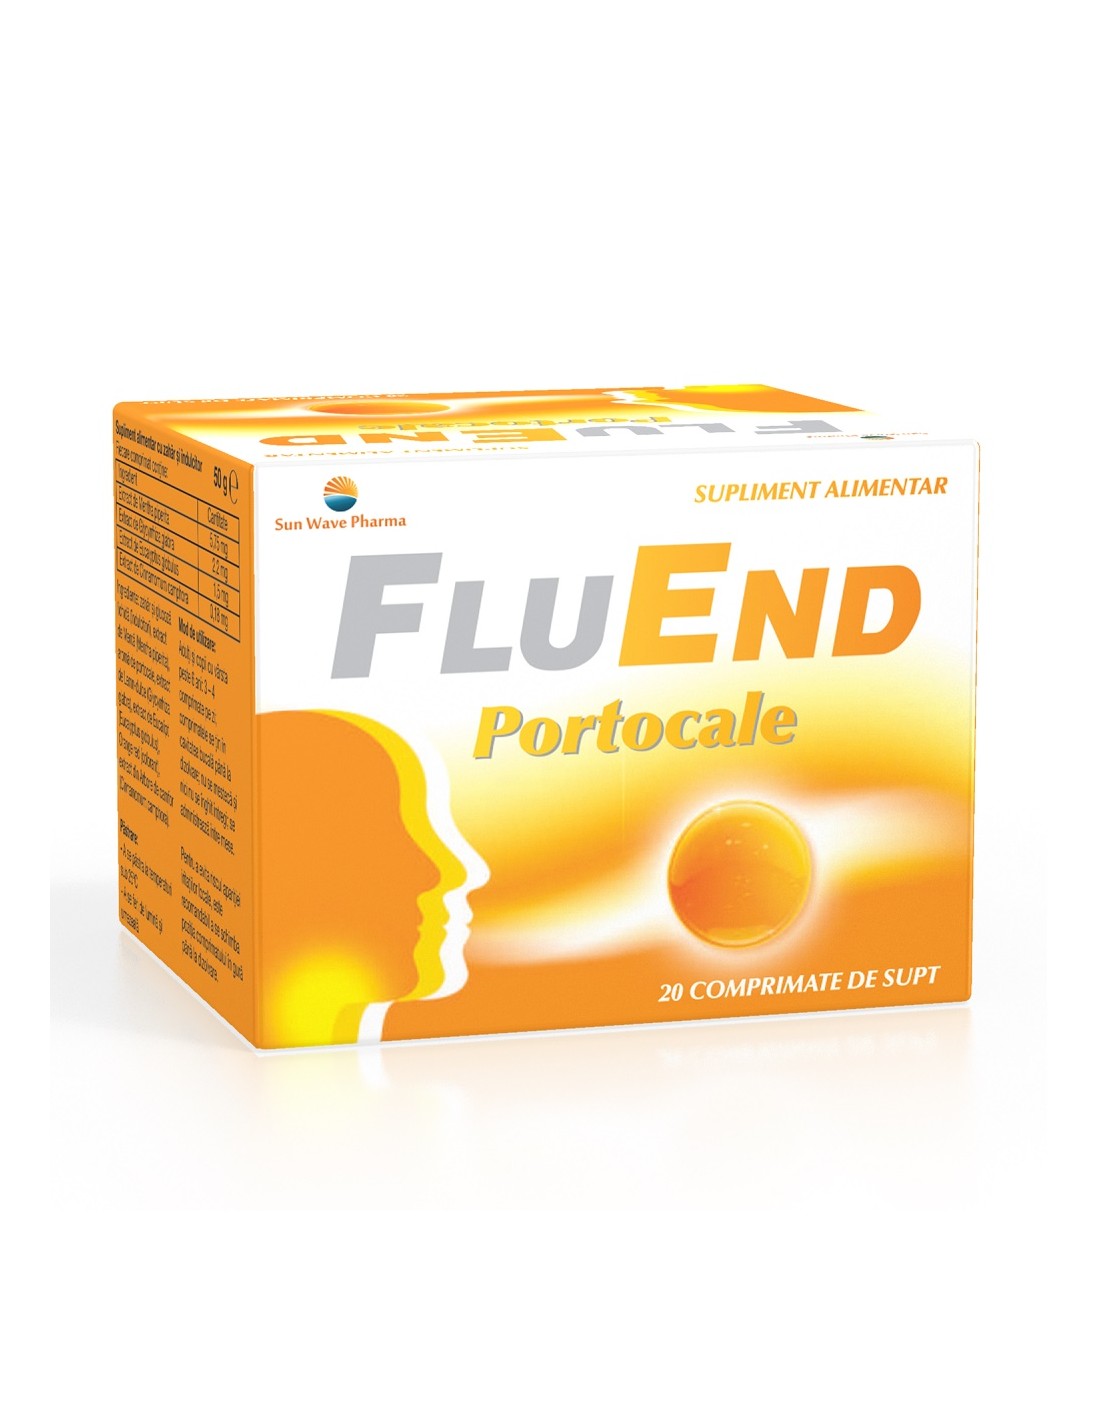 FluEnd portocale, 20 comprimate de supt - DURERE-DE-GAT - SUNWAVE